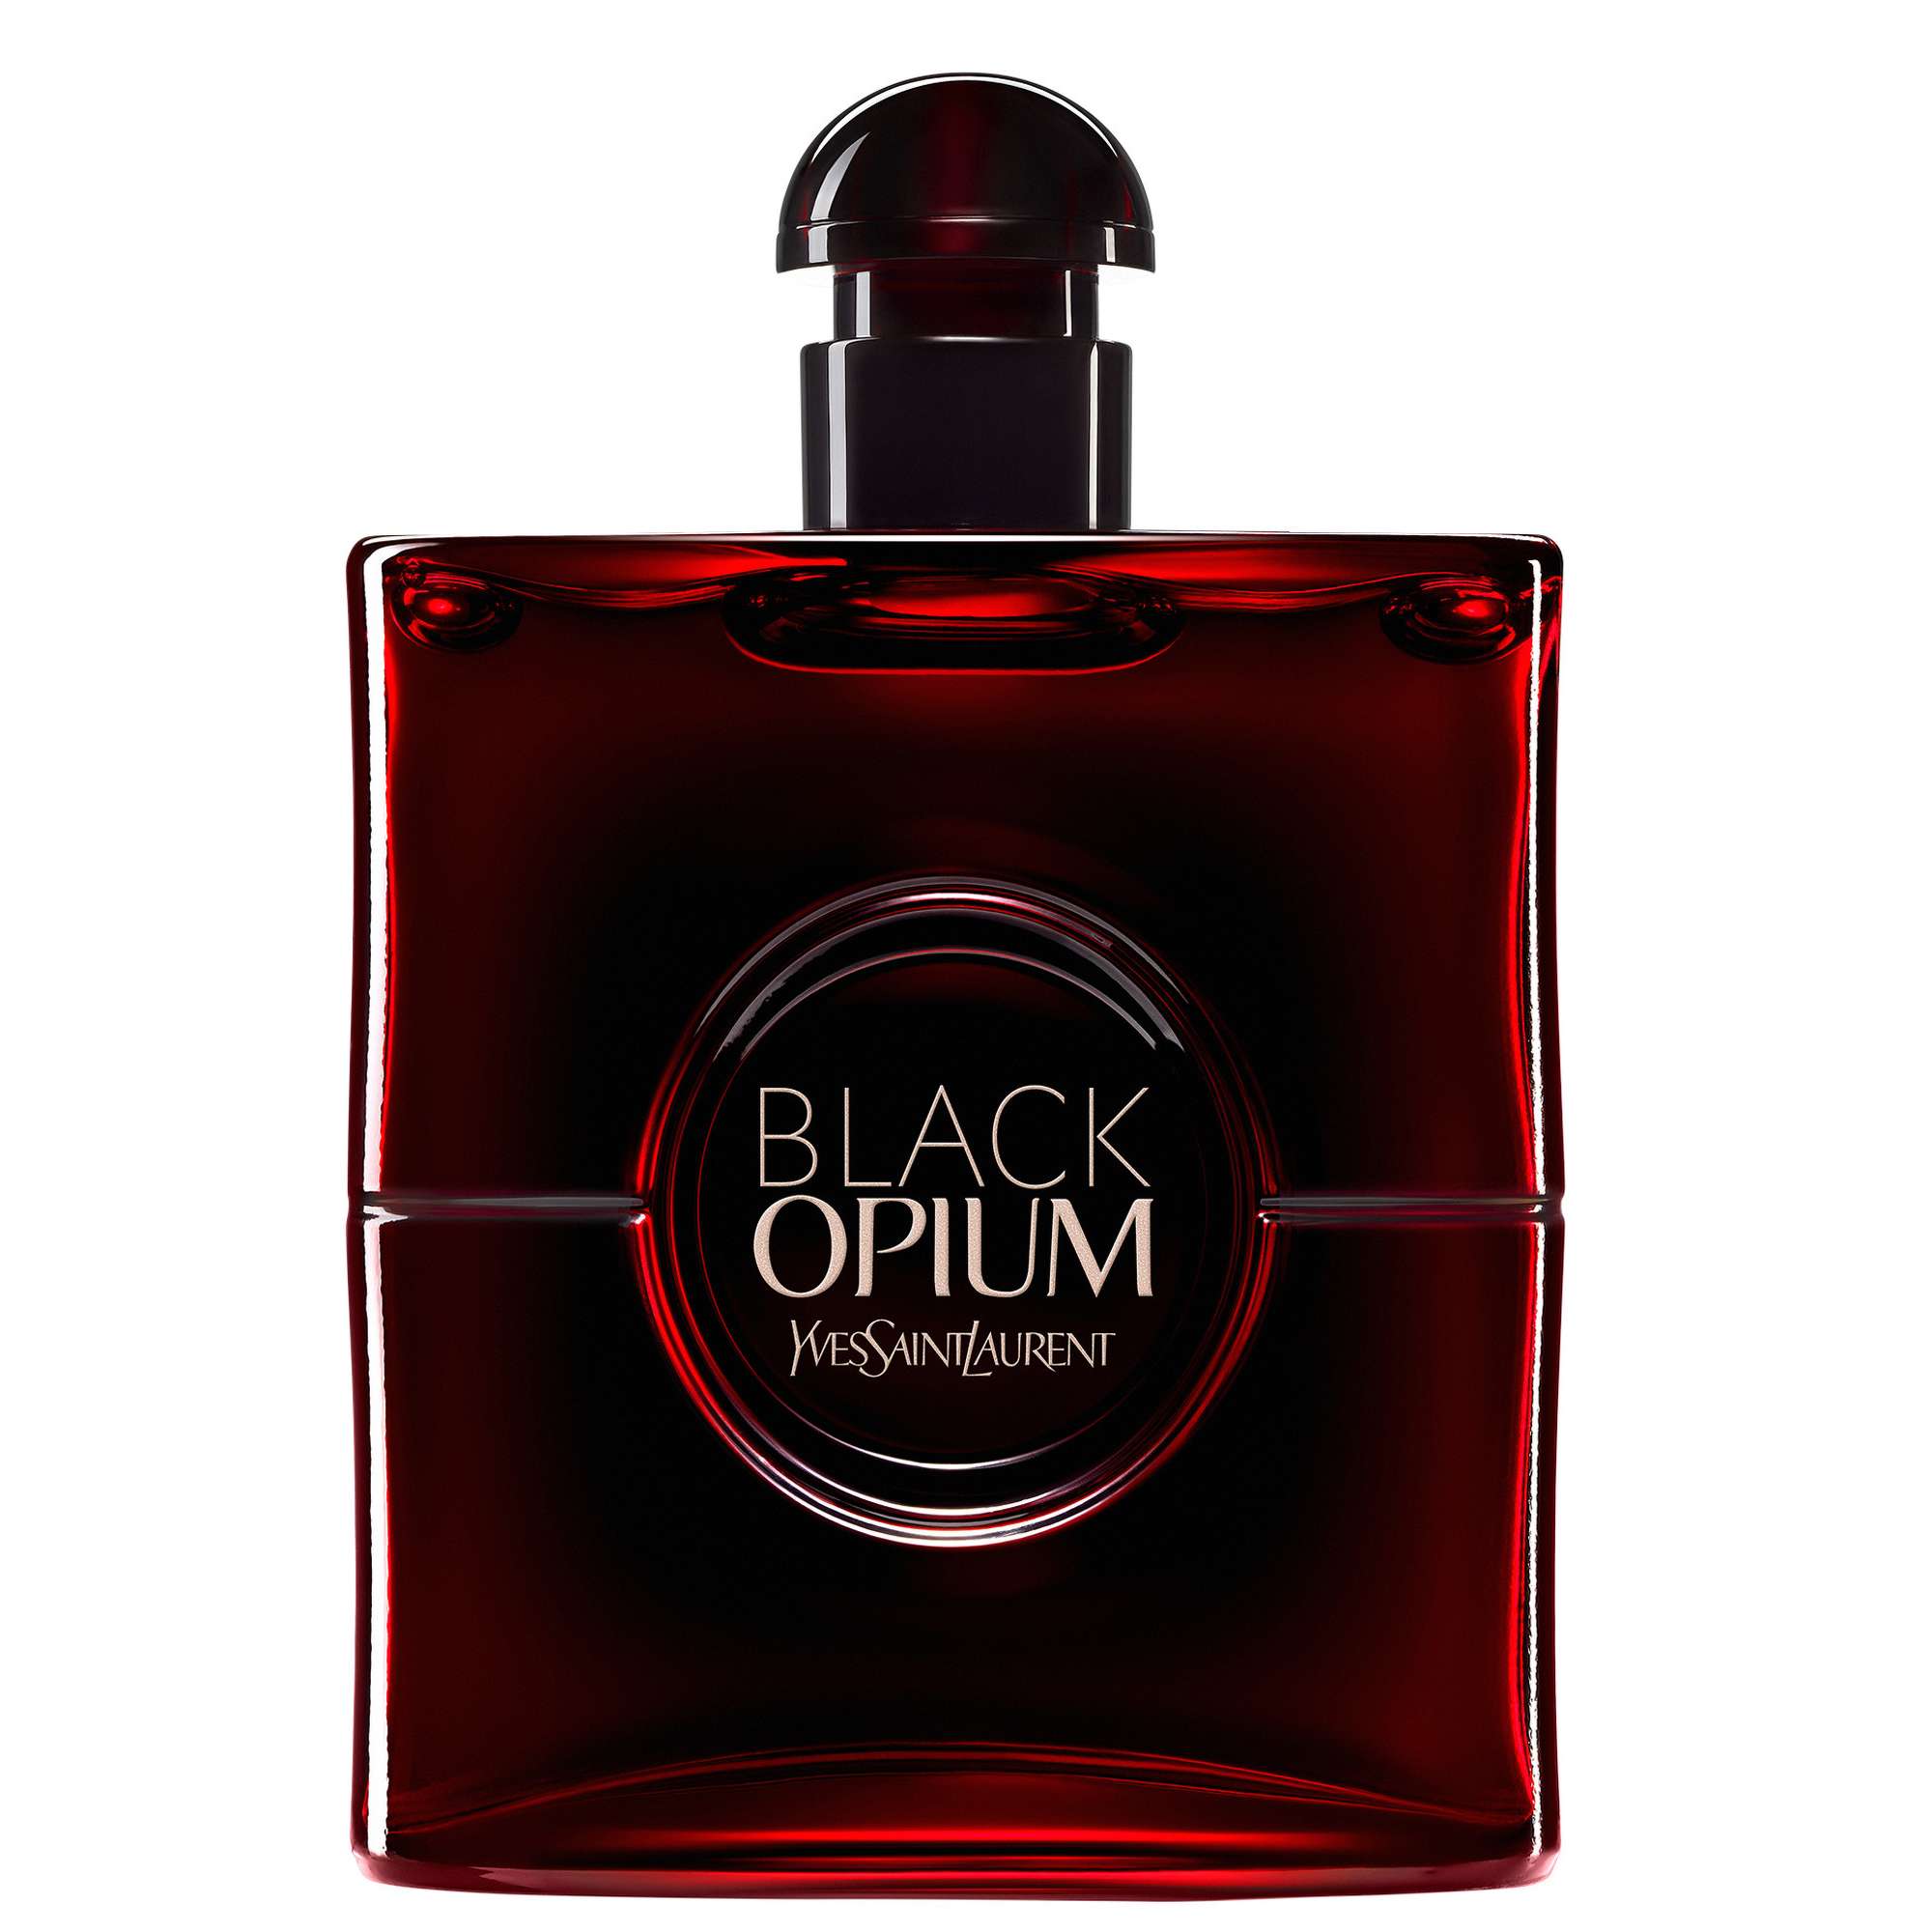 Photos - Women's Fragrance Yves Saint Laurent Black Opium Over Red Eau de Parfum Spray 90ml 